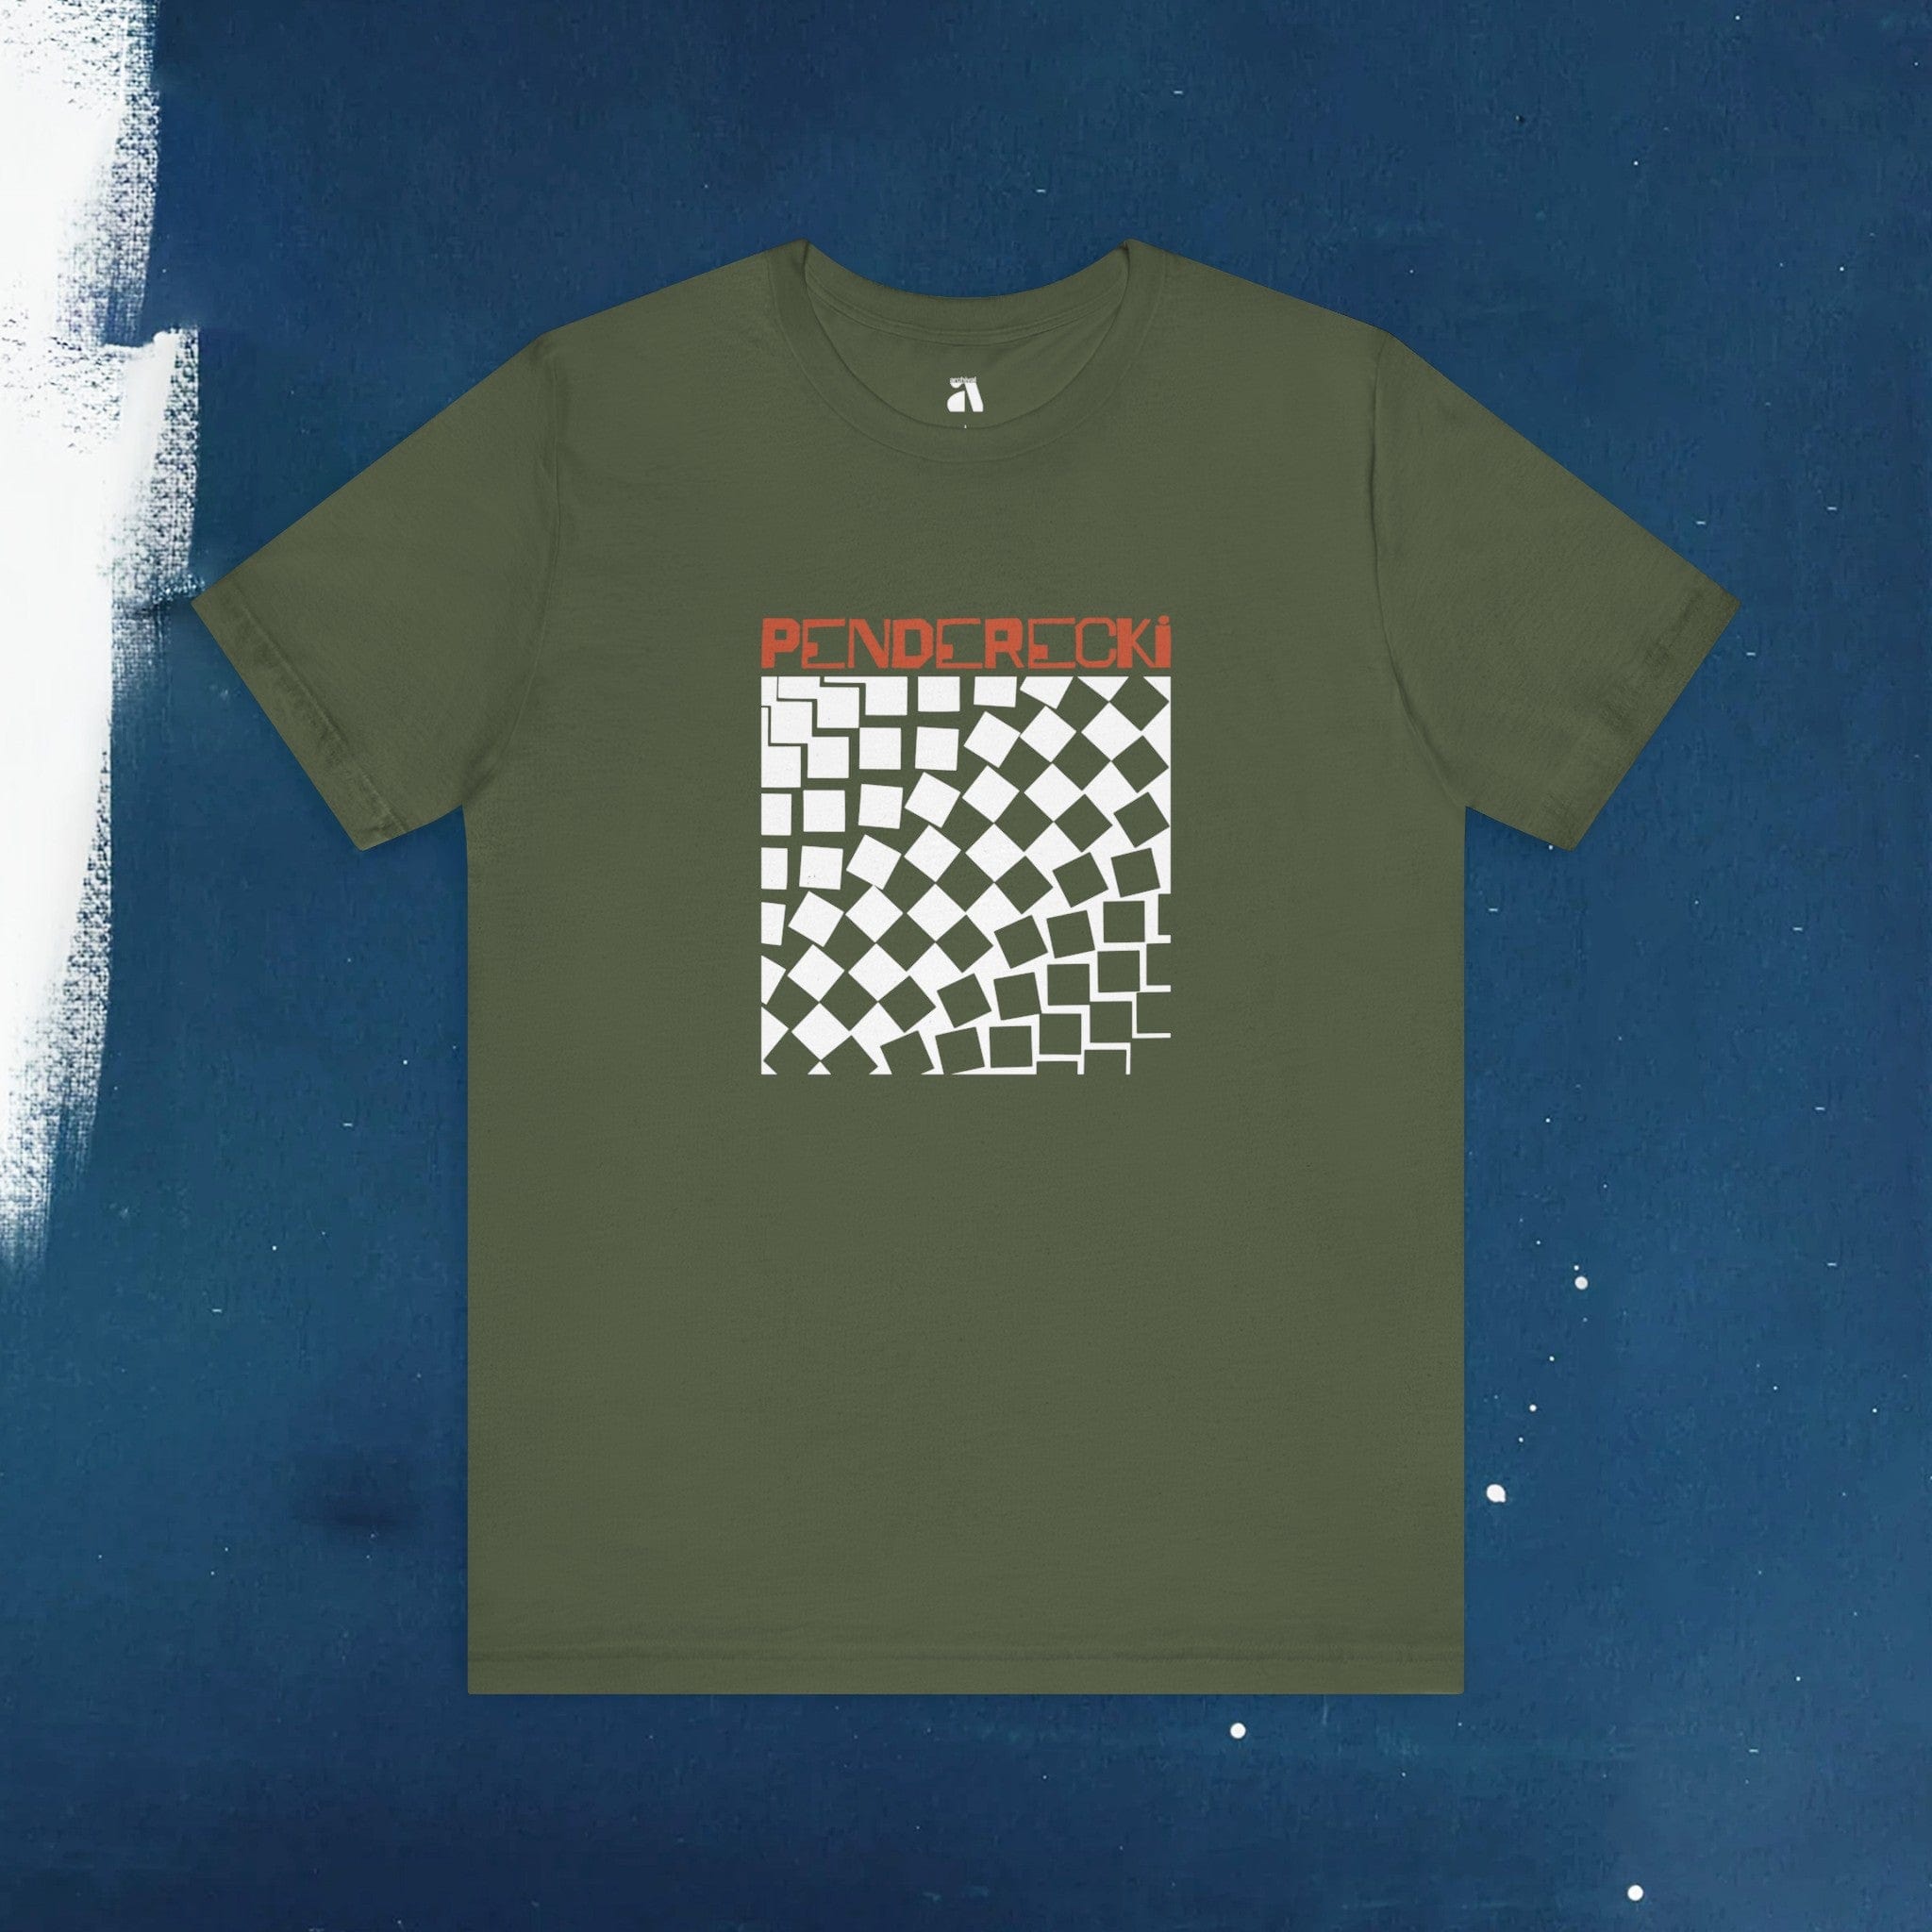 Penderecki: Abstract T-Shirt